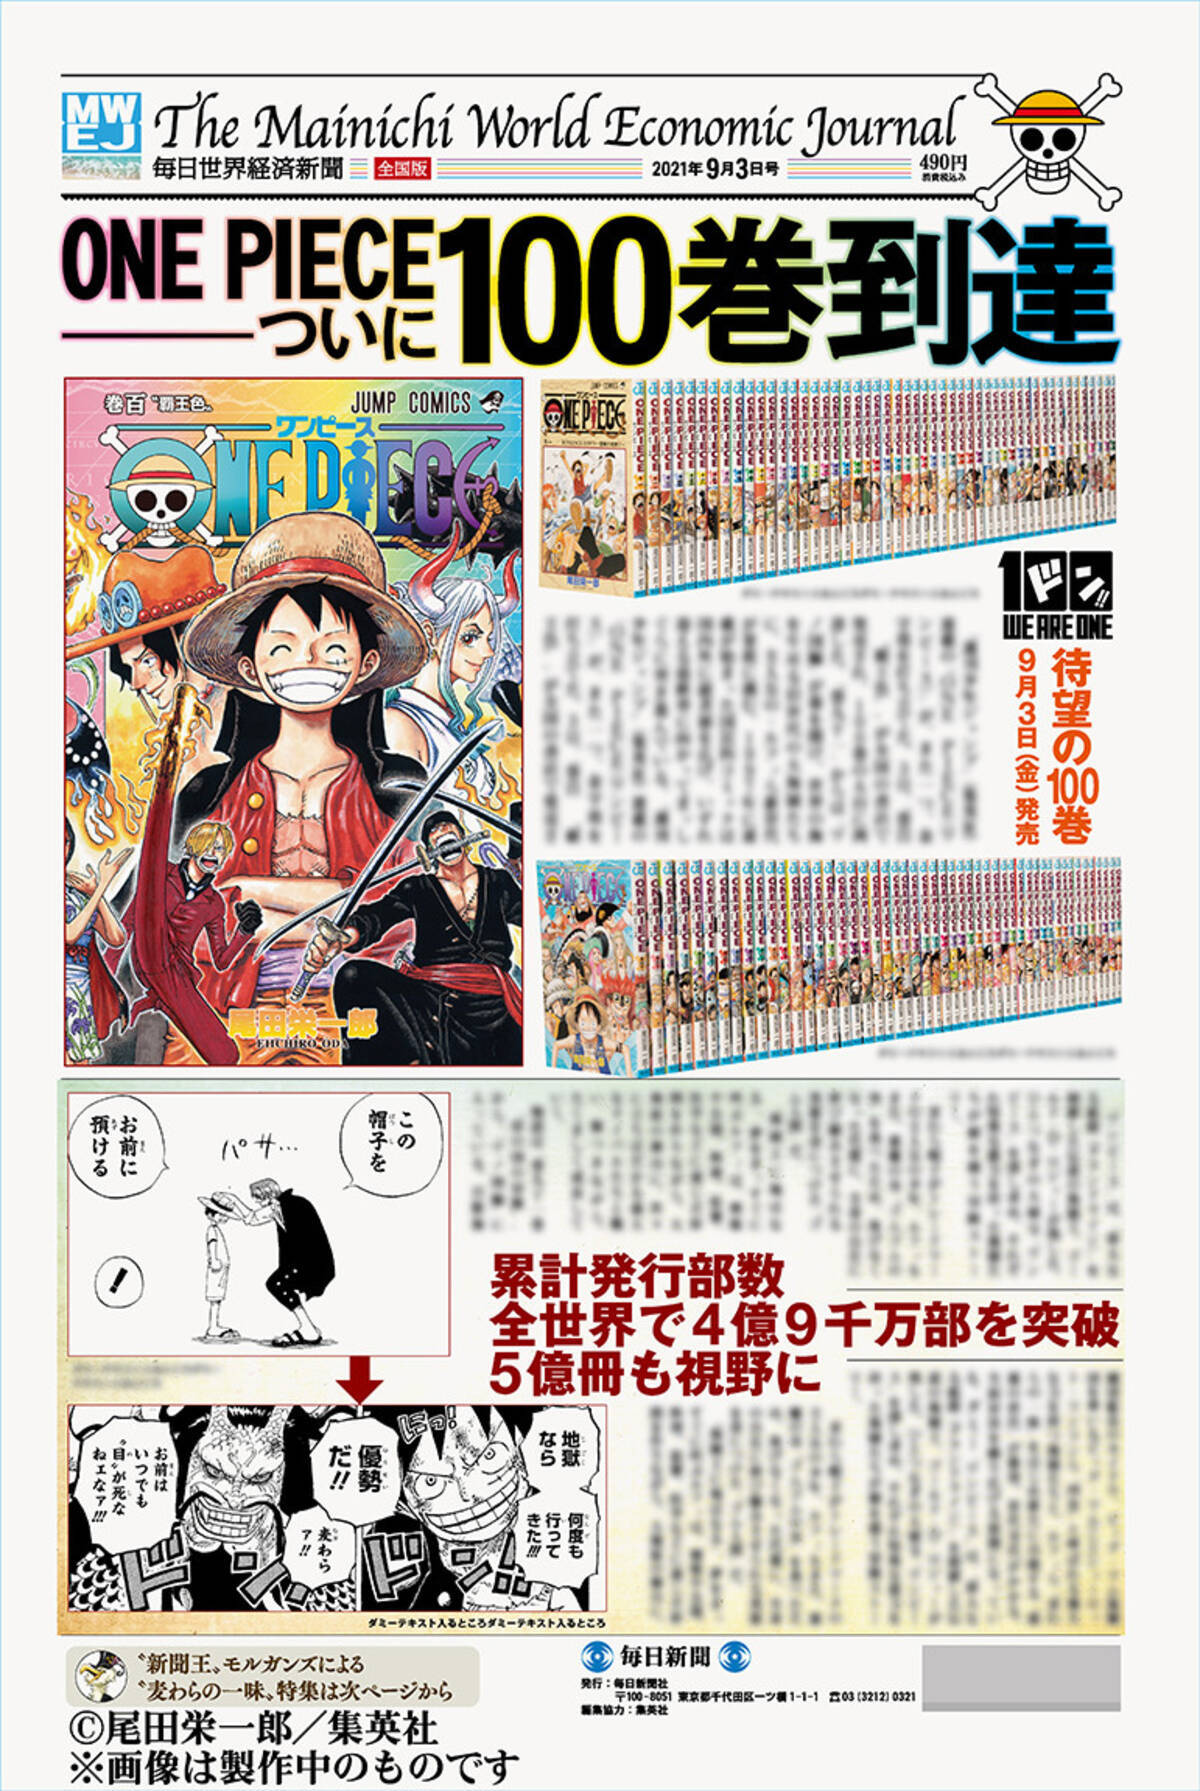 One Piece コミックス100巻発売記念 特別タブロイド 毎日世界経済新聞 発売スタート 21年8月17日 エキサイトニュース